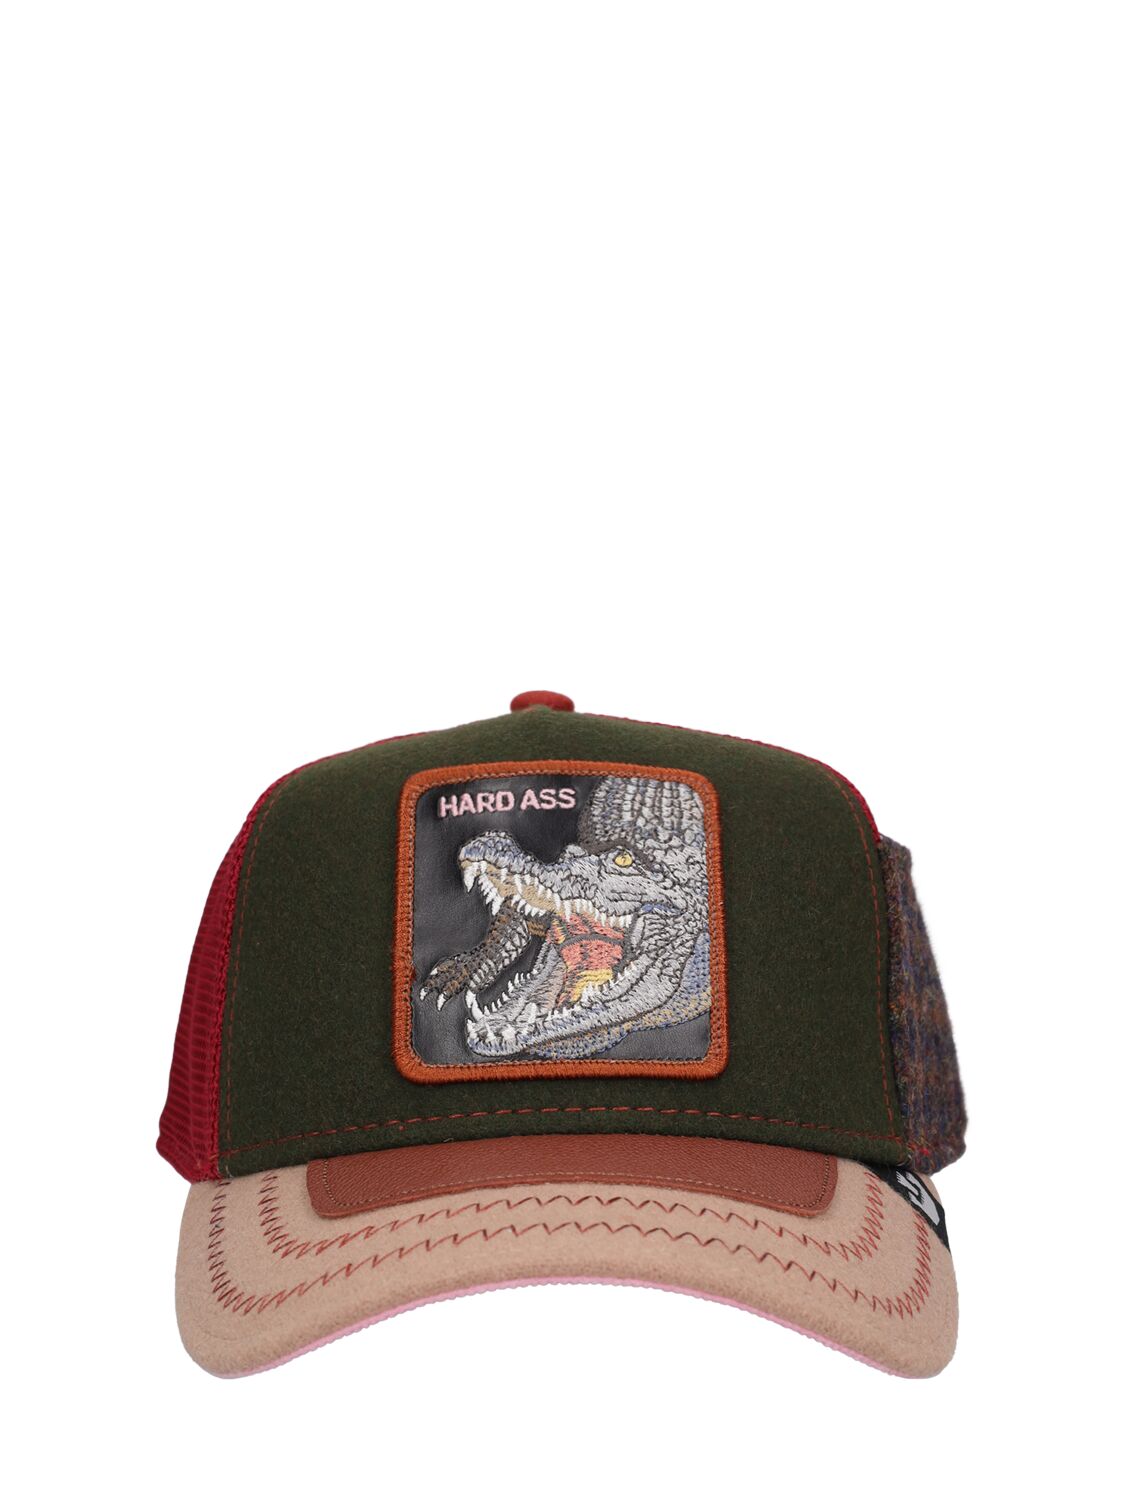 Trunchbull Trucker Hat